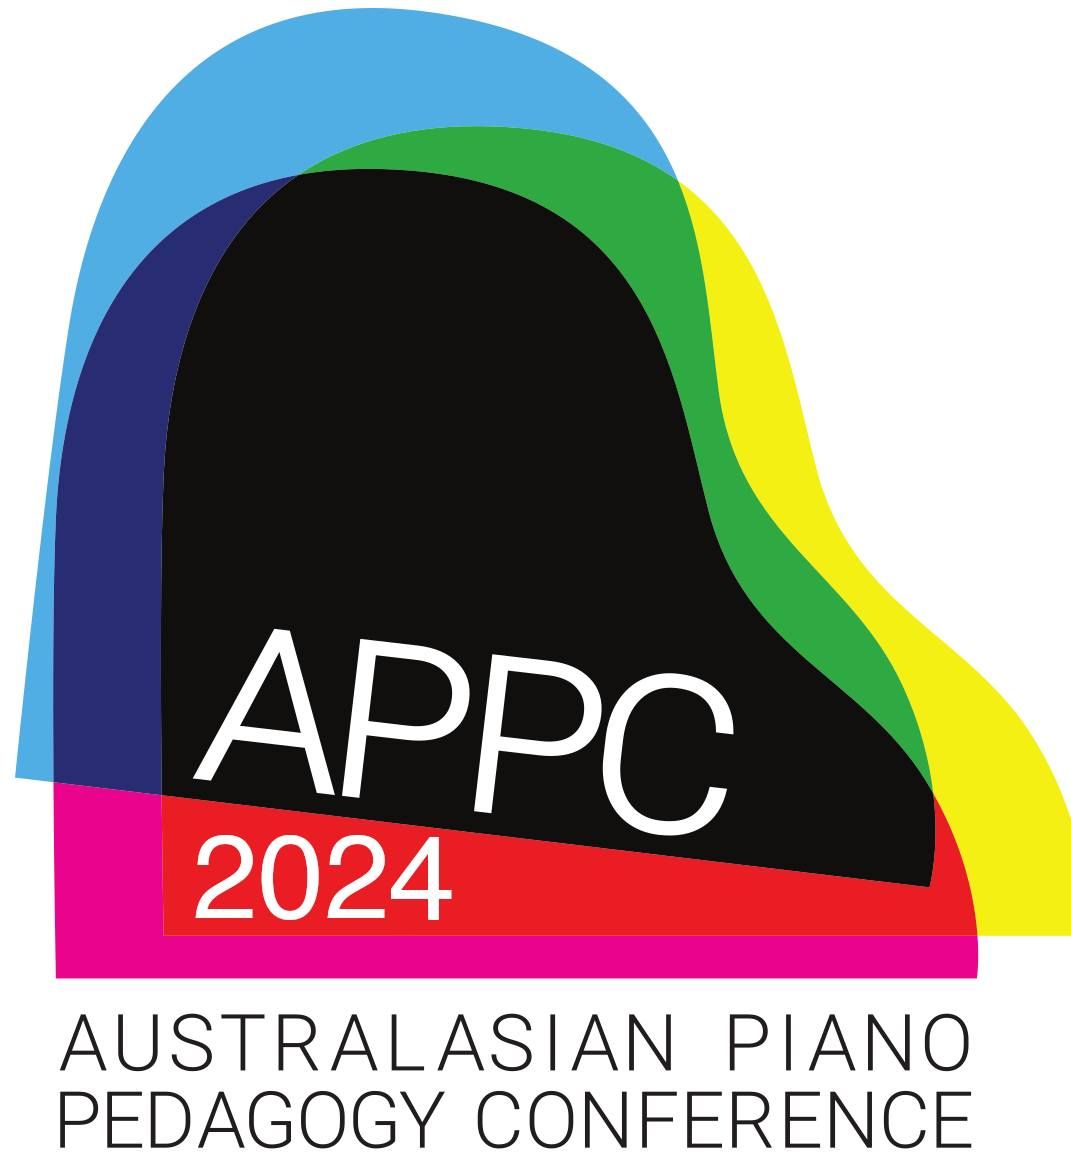 Australasian Piano Pedagogy Conference 2024